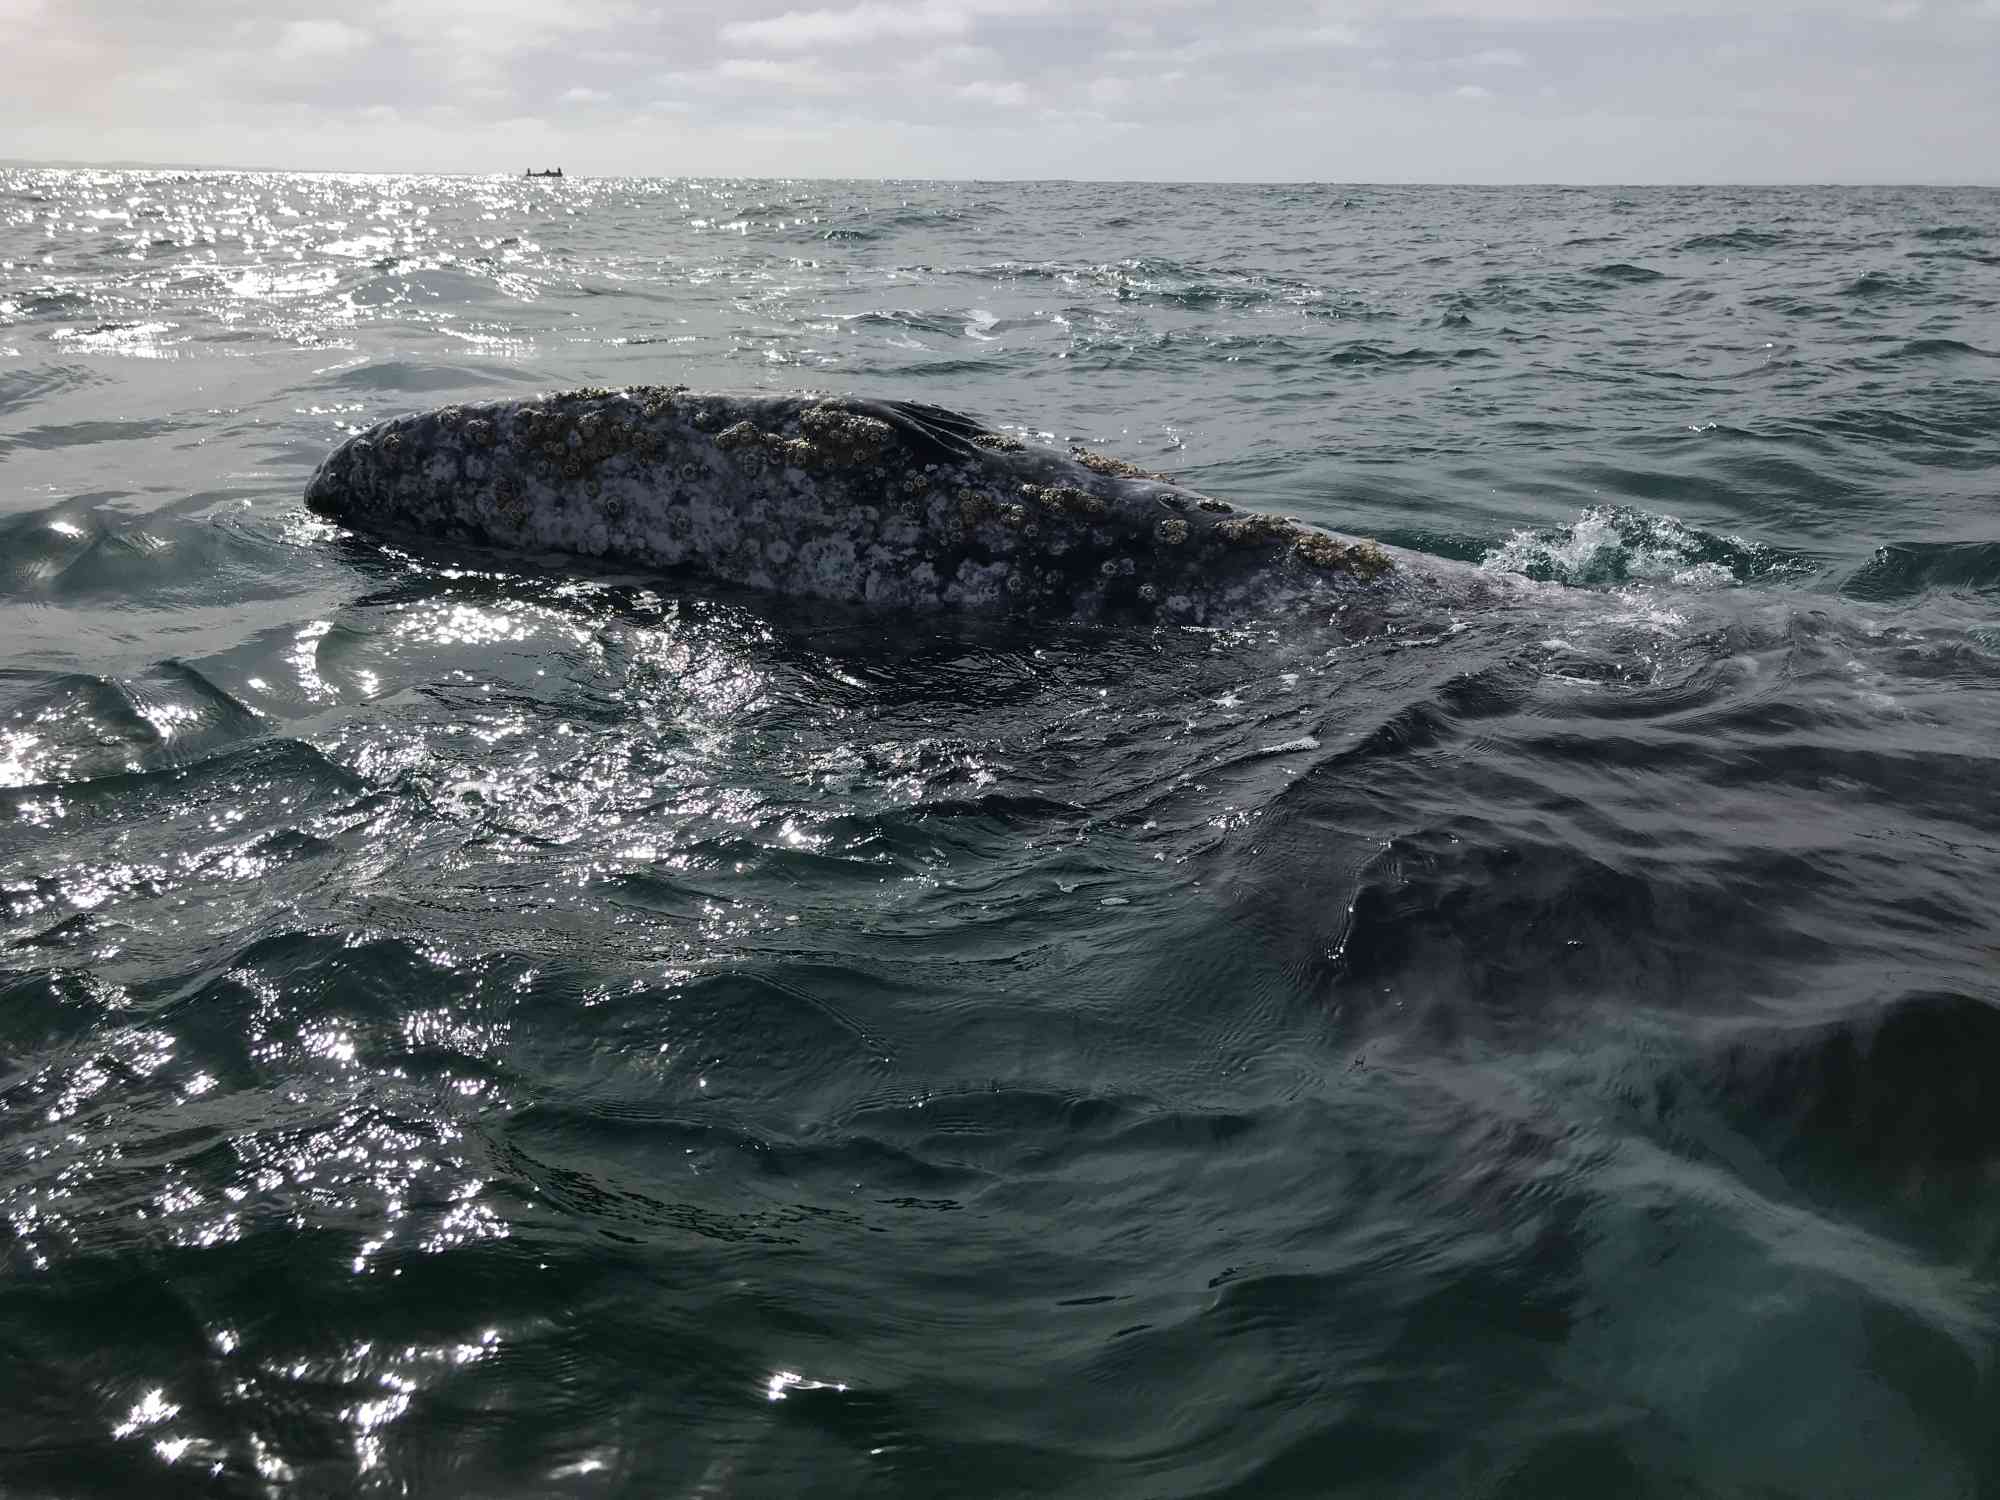 Gray whale swimming in baja california